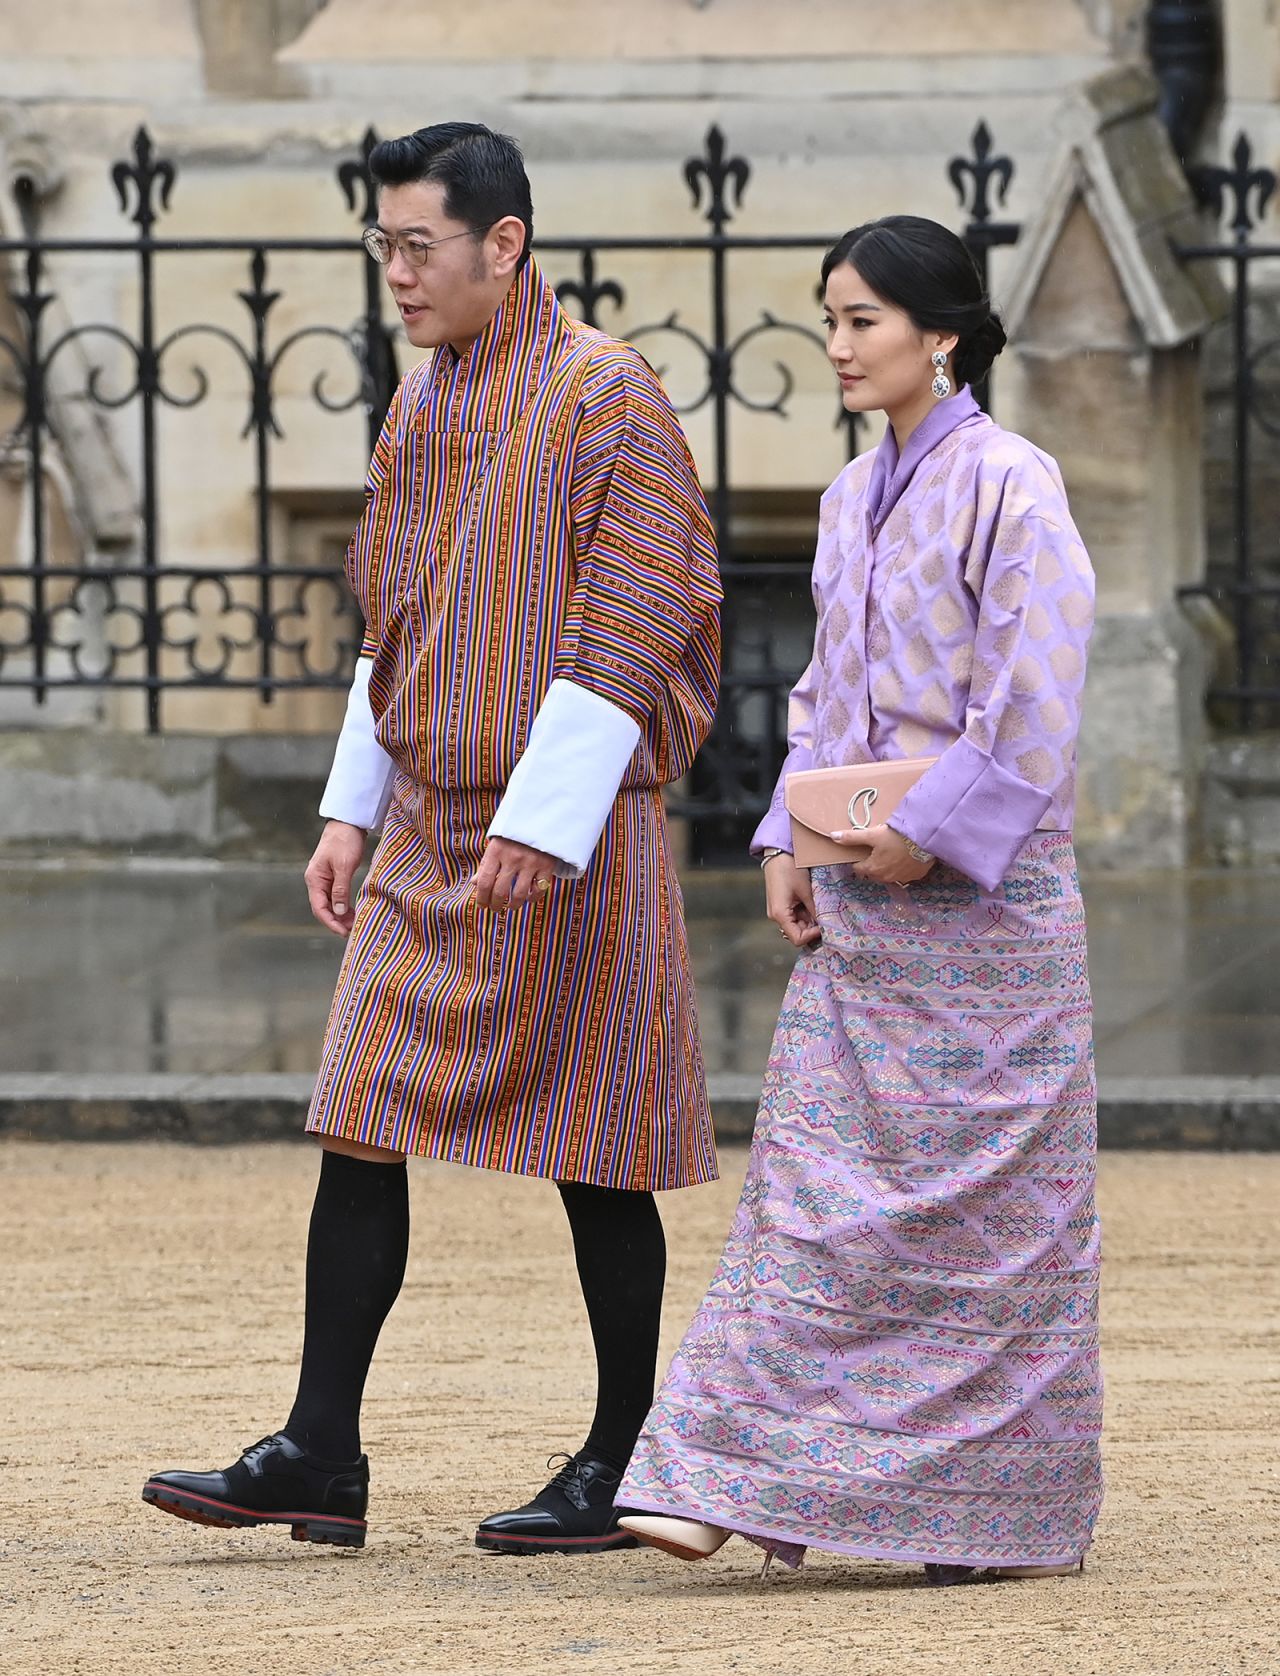 King Jigme Khesar Namgyel Wangchuck of Bhutan and Queen Jetsun Pema of Bhutan were also in traditional dress.